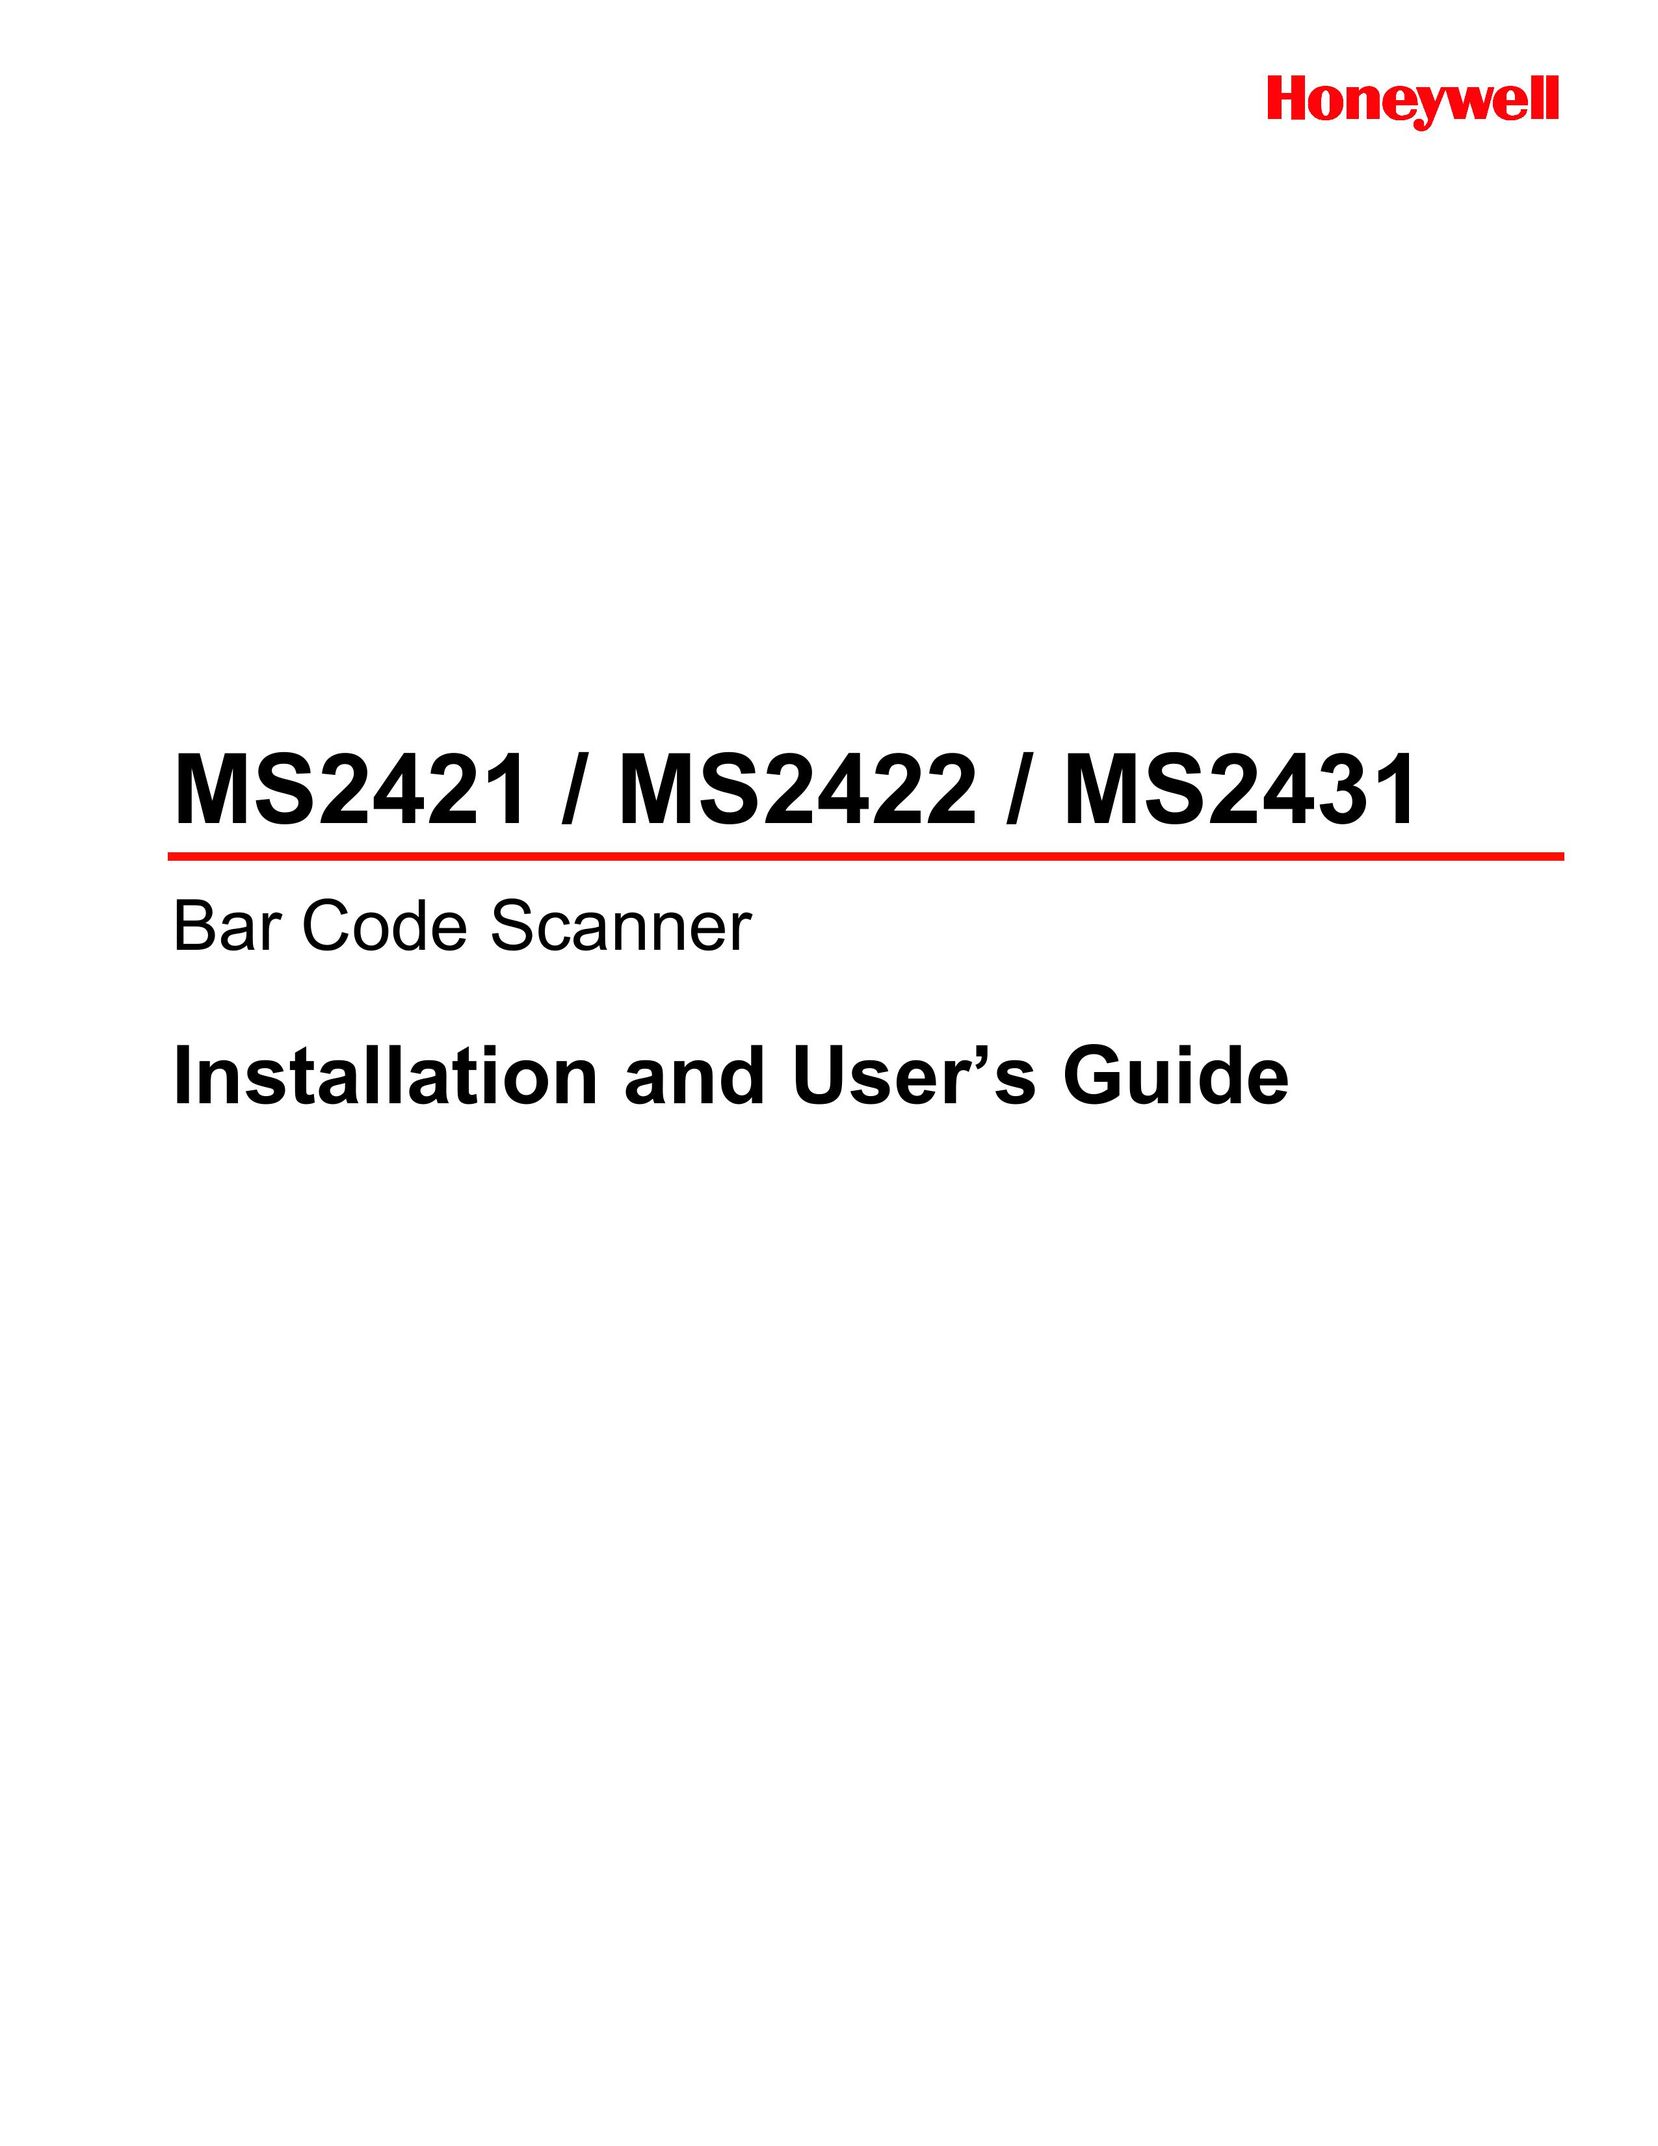 Honeywell MS2422 Barcode Reader User Manual